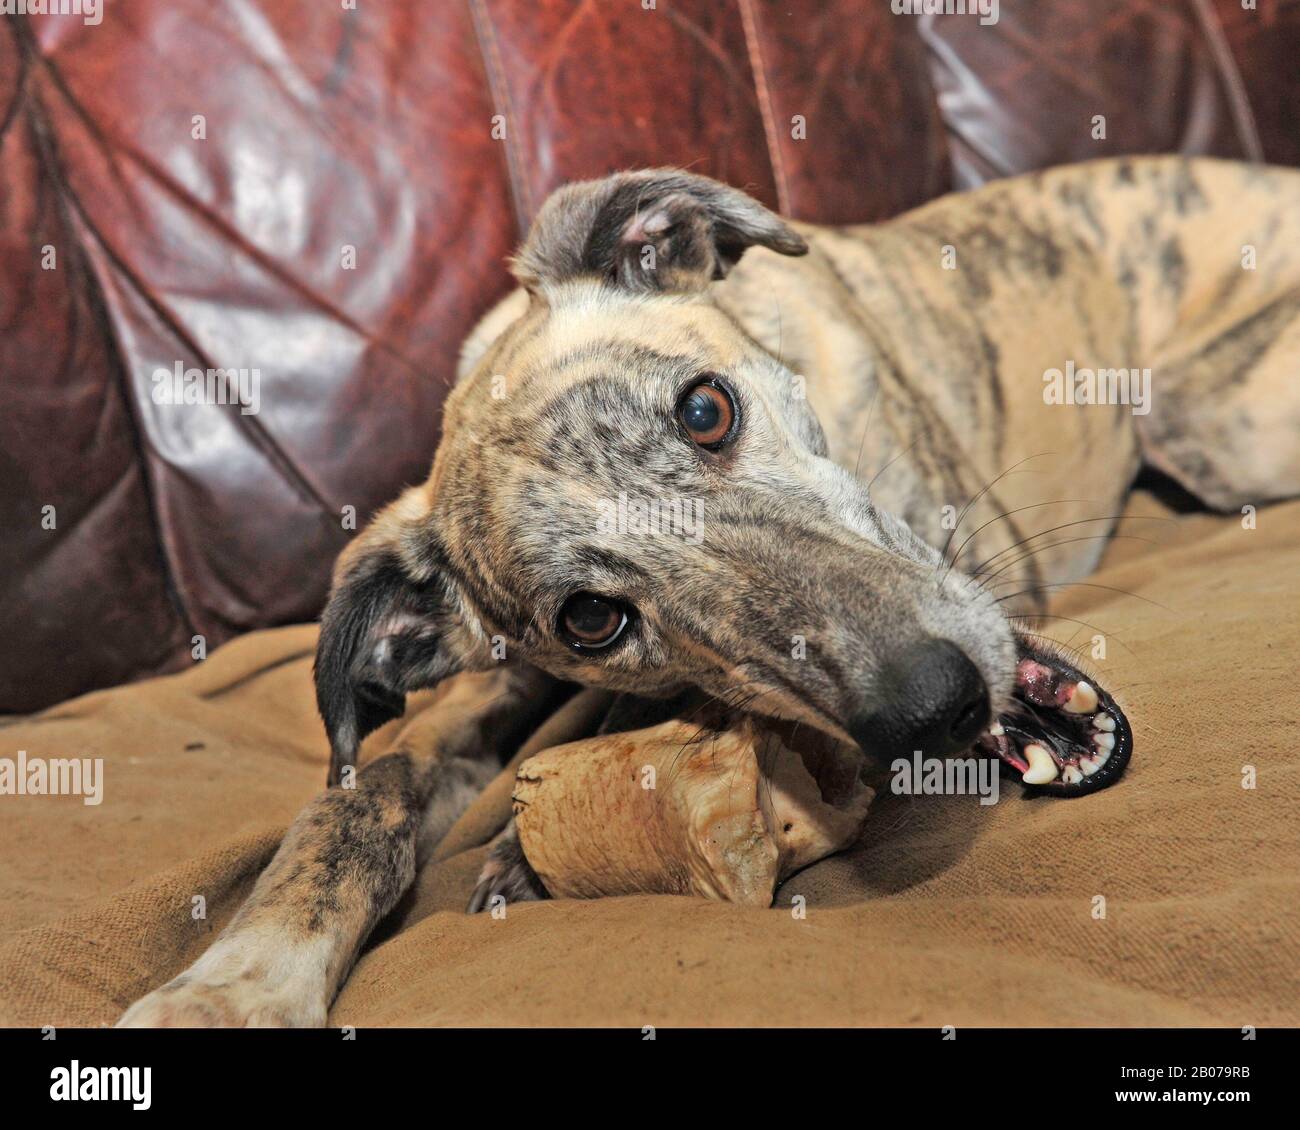 lurcher chewing a raw meaty bone Stock Photo